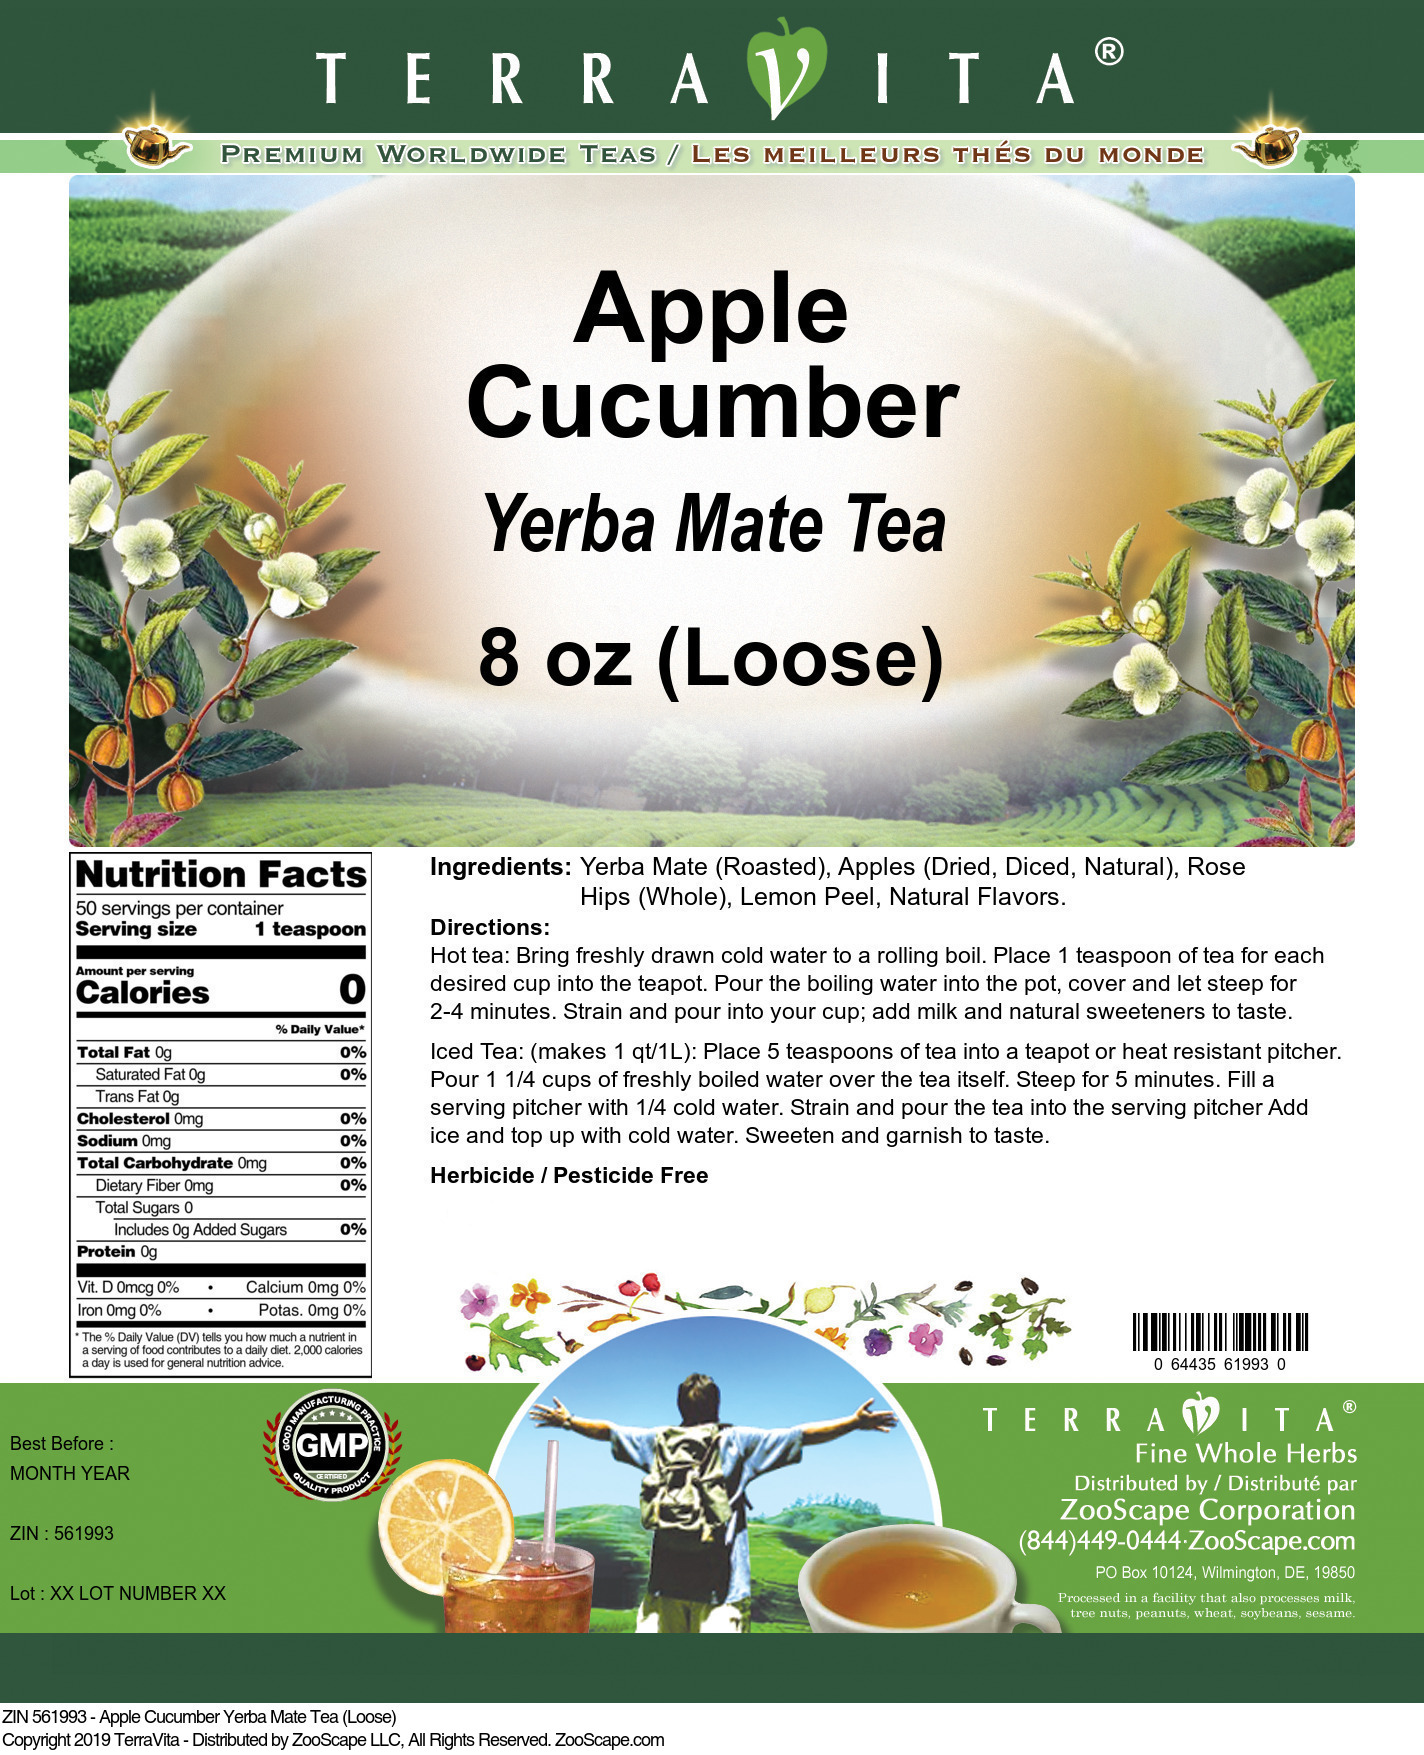 Apple Cucumber Yerba Mate Tea (Loose) - Label